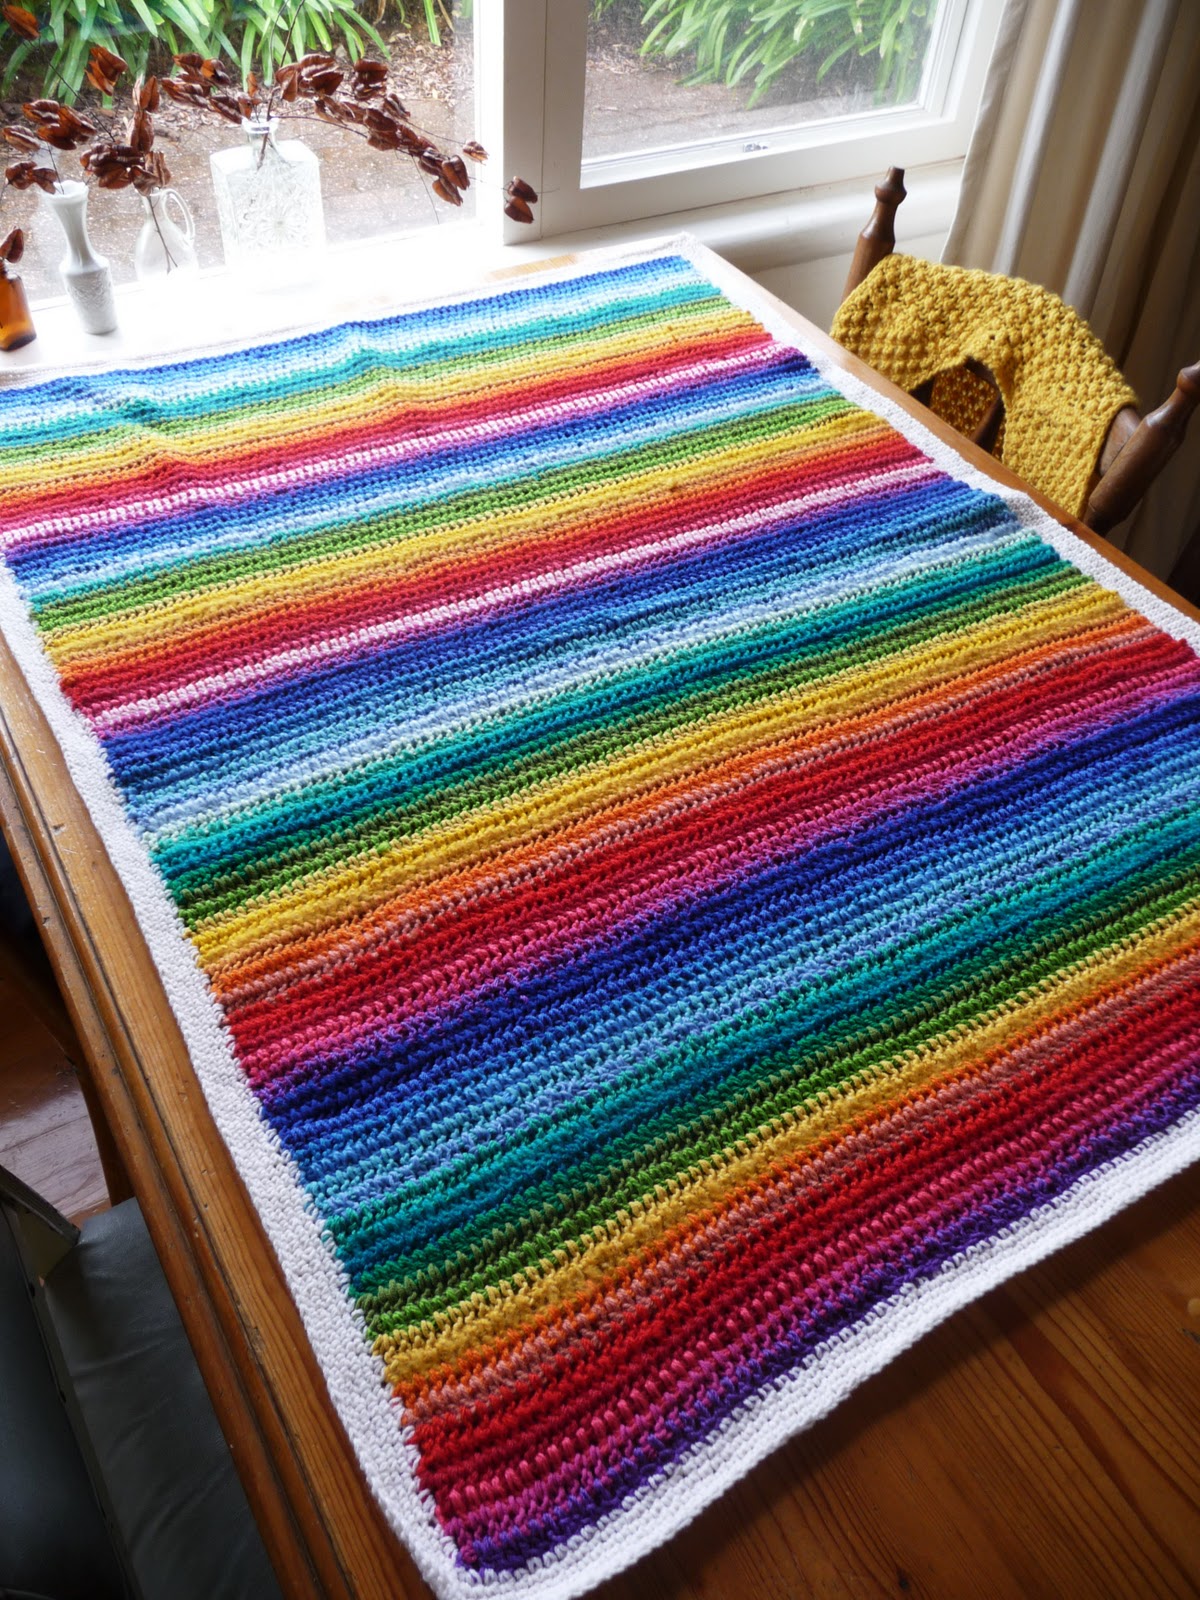 thrift. nest. sew.: rainbow crochet blanket Part 3